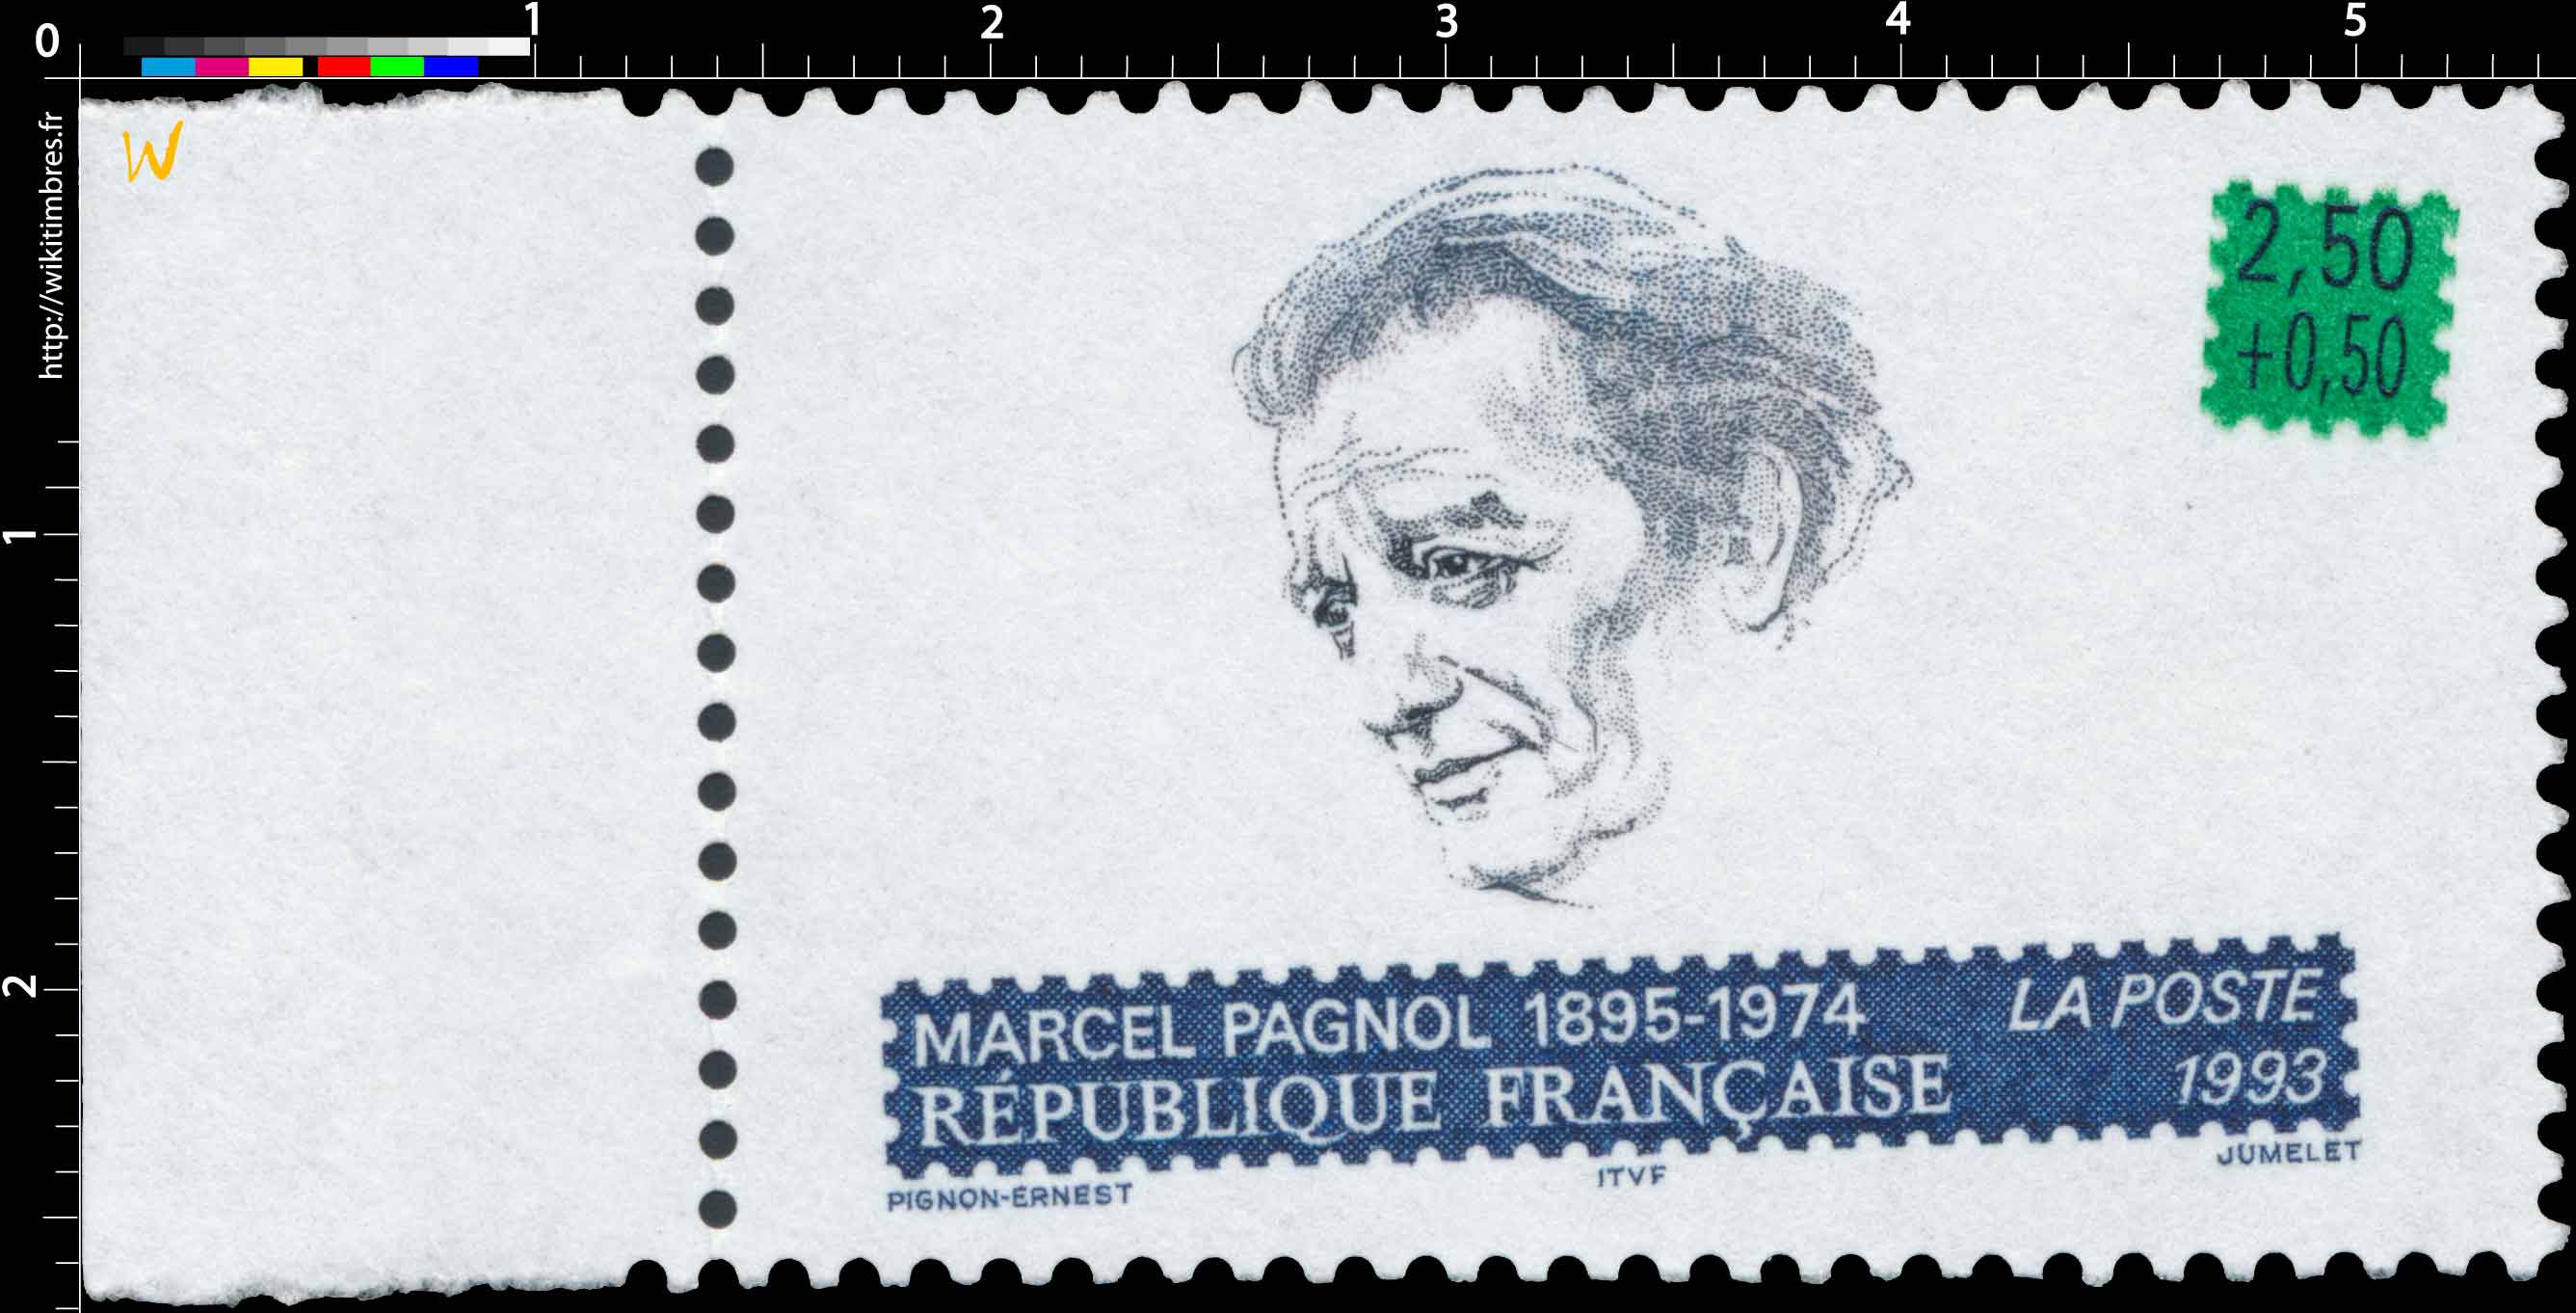 1993 MARCEL PAGNOL 1895-1974